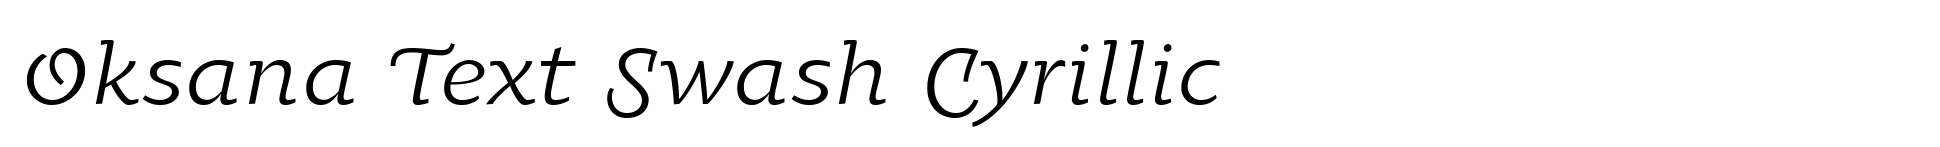 Oksana Text Swash Cyrillic